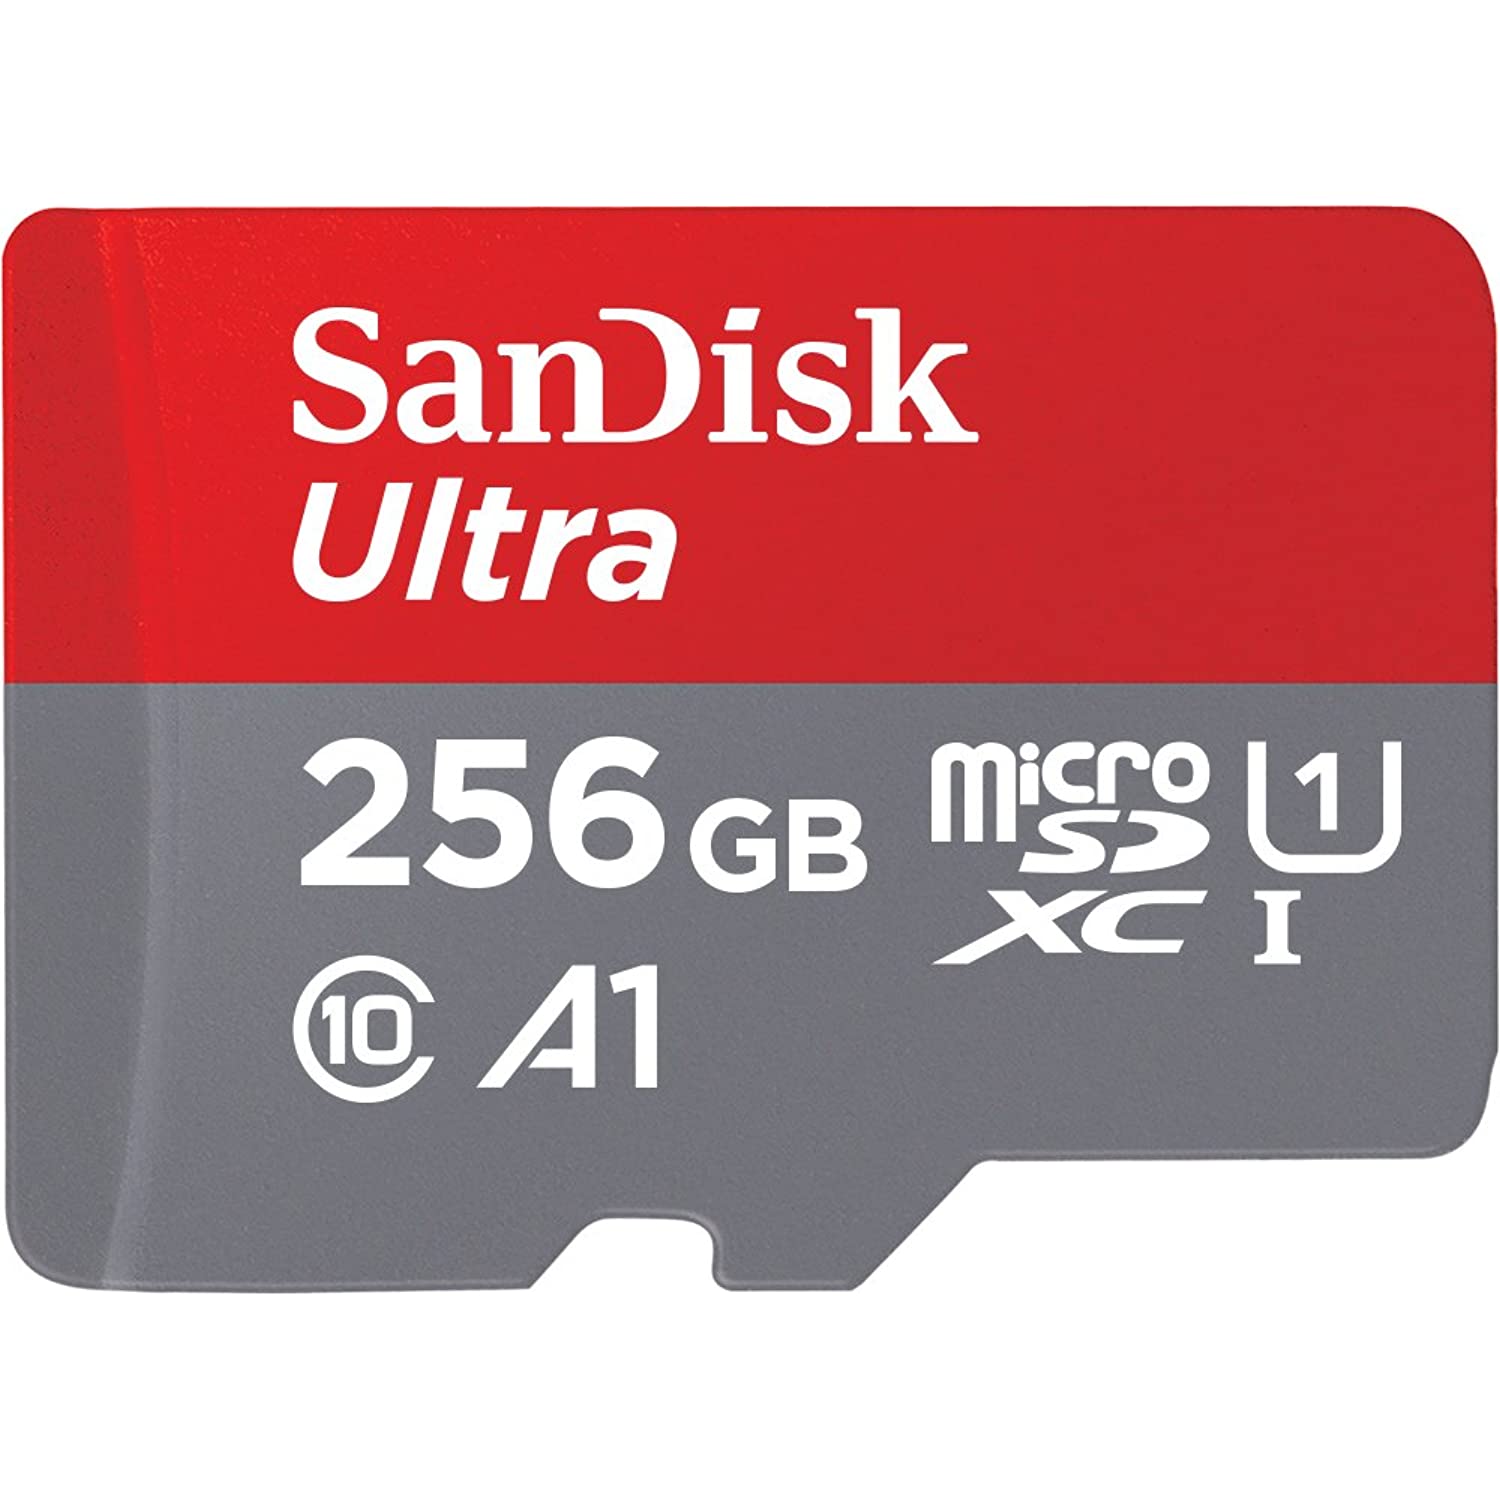 Sandisk 256gb Ultra Microsdxc Uhs I Memory Card With Adapter 100mb S C10 U1 Full Hd A1 Micro Sd Card Sdsquar 256g Gn6ma Black Walmart Com Walmart Com